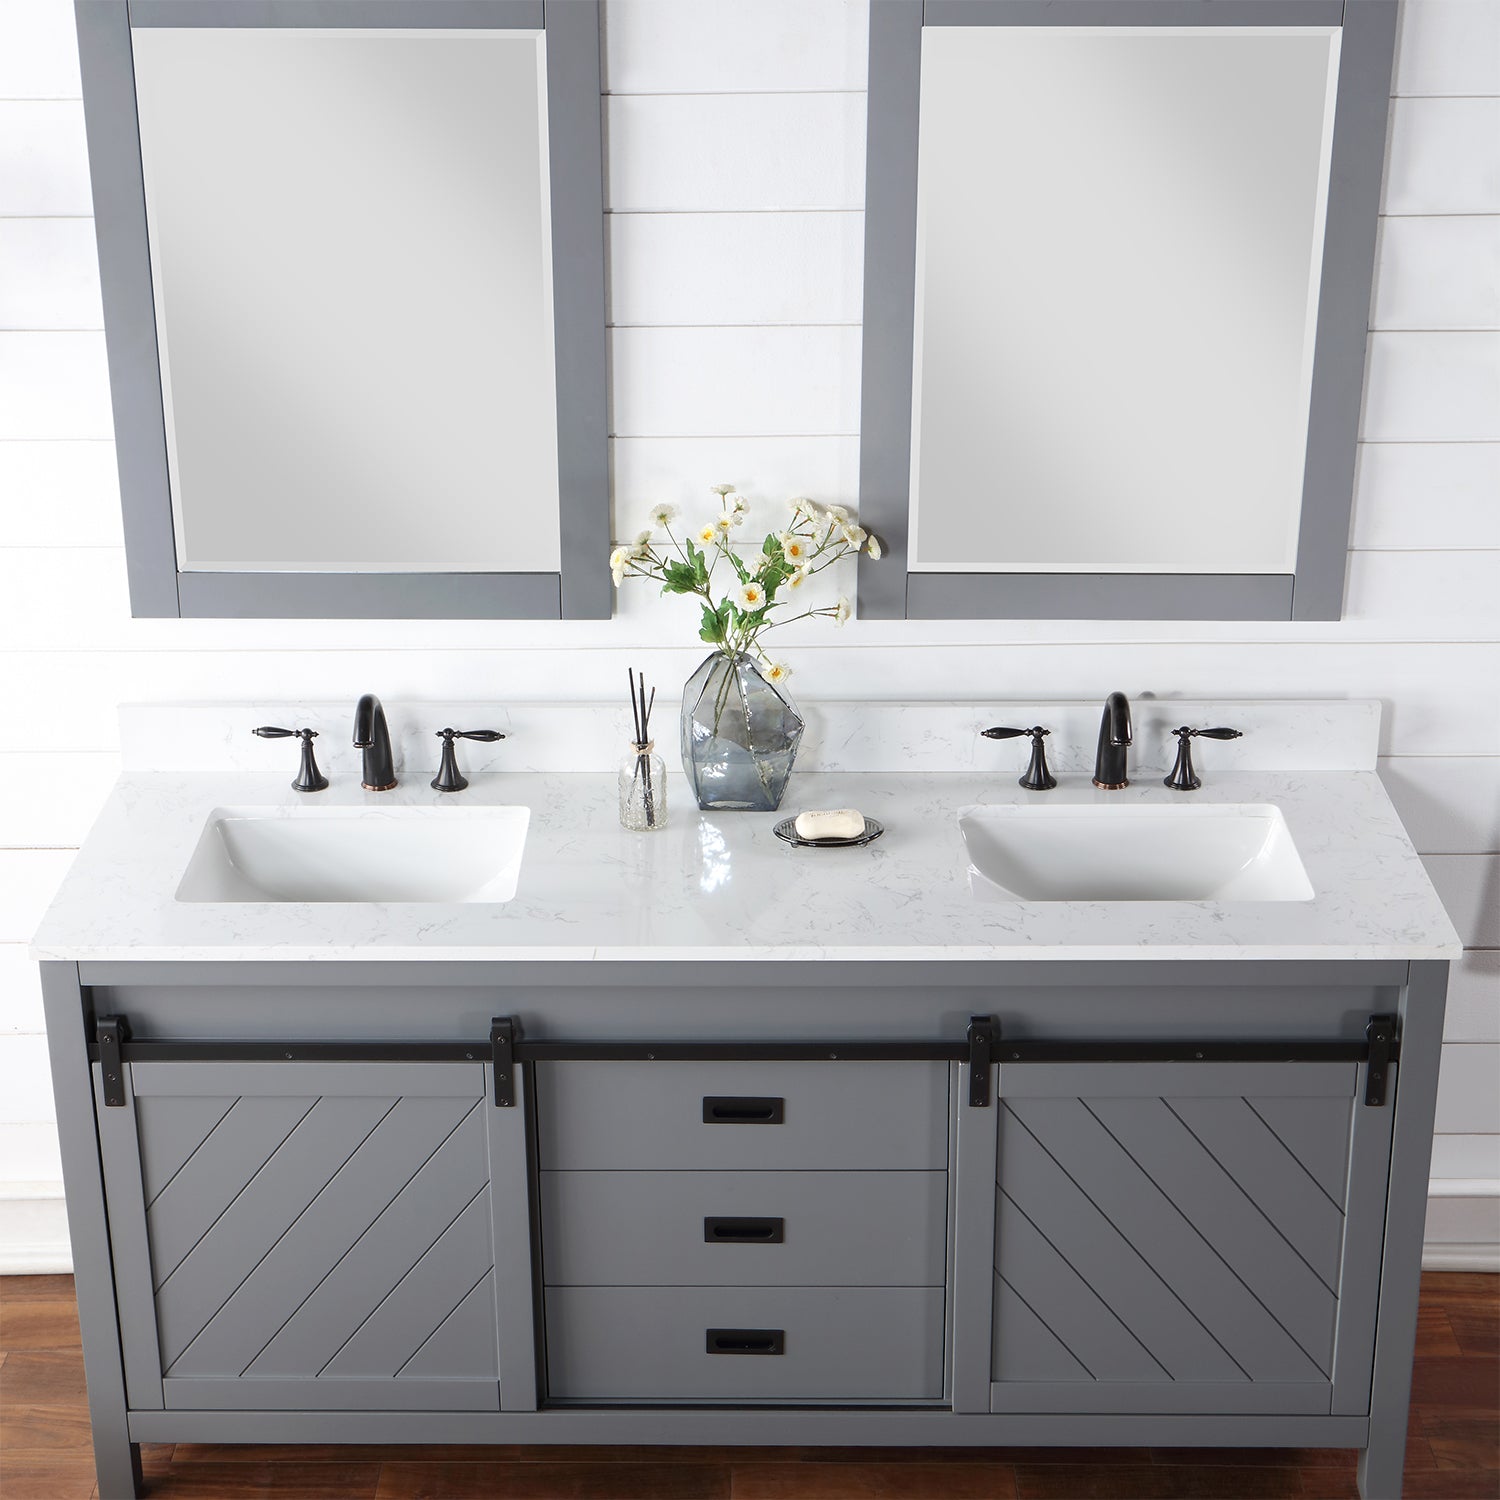 Kinsley 72" Double Bathroom Vanity Set with Aosta White Marble Countertop